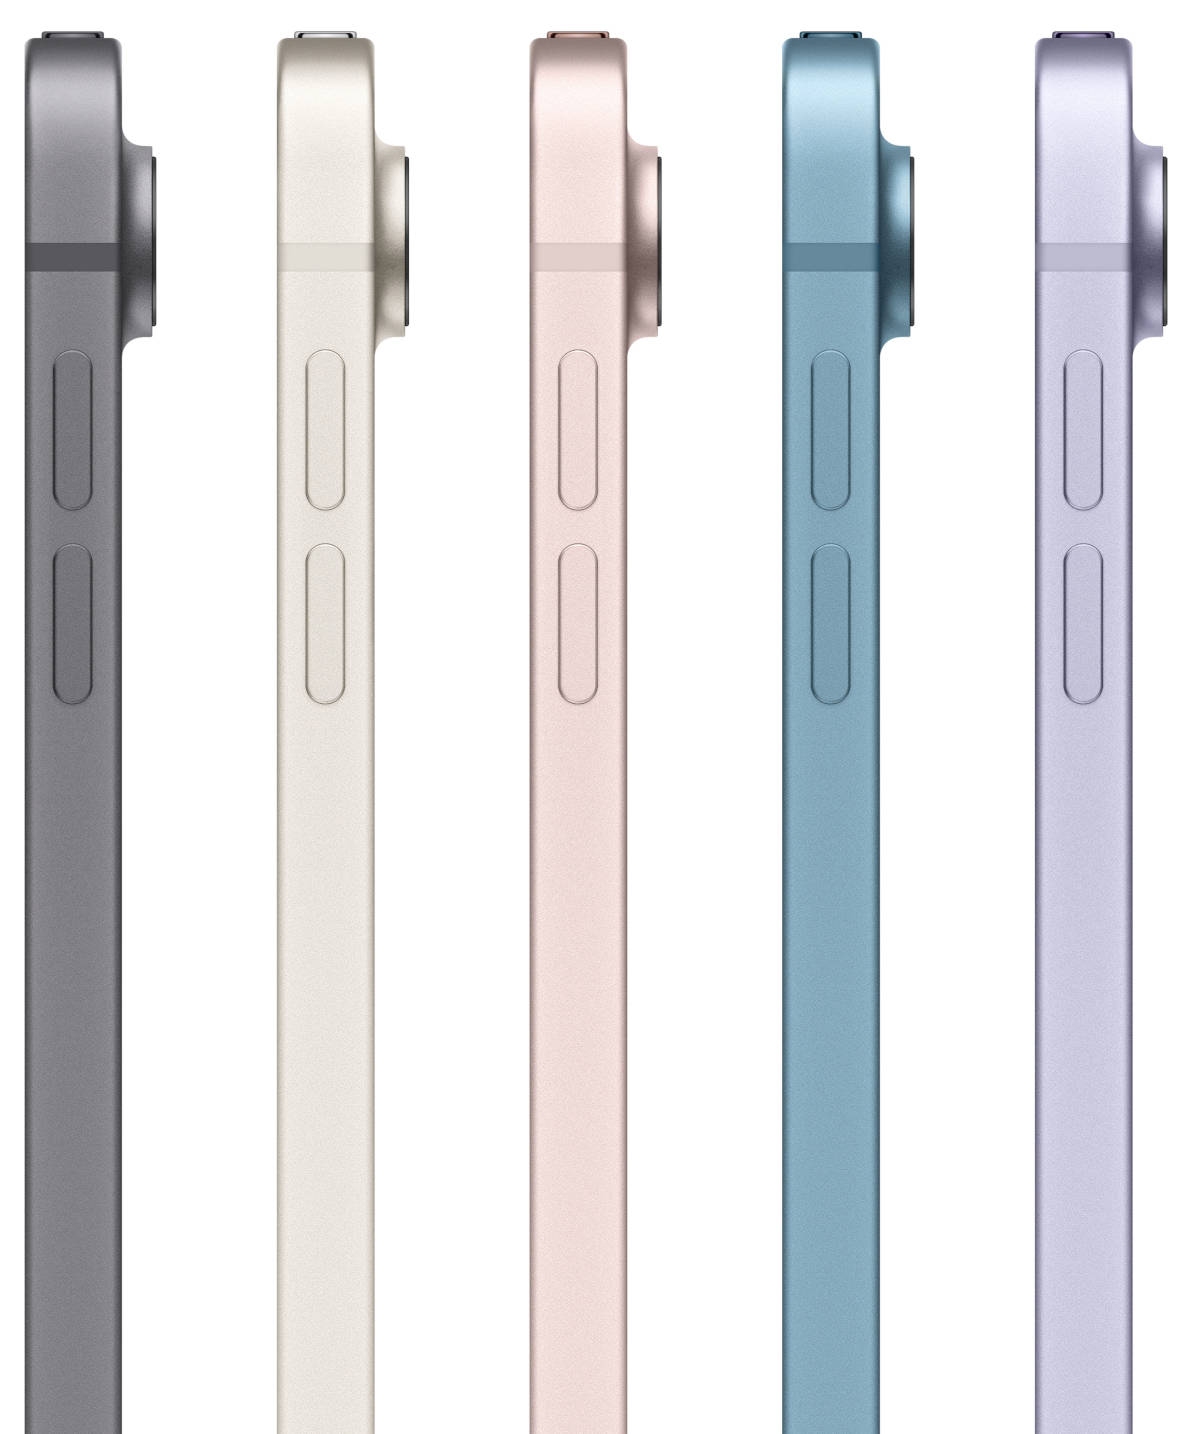 Apple iPad Air (2022) 10,9" Wi-Fi 64 ГБ, фиолетовый